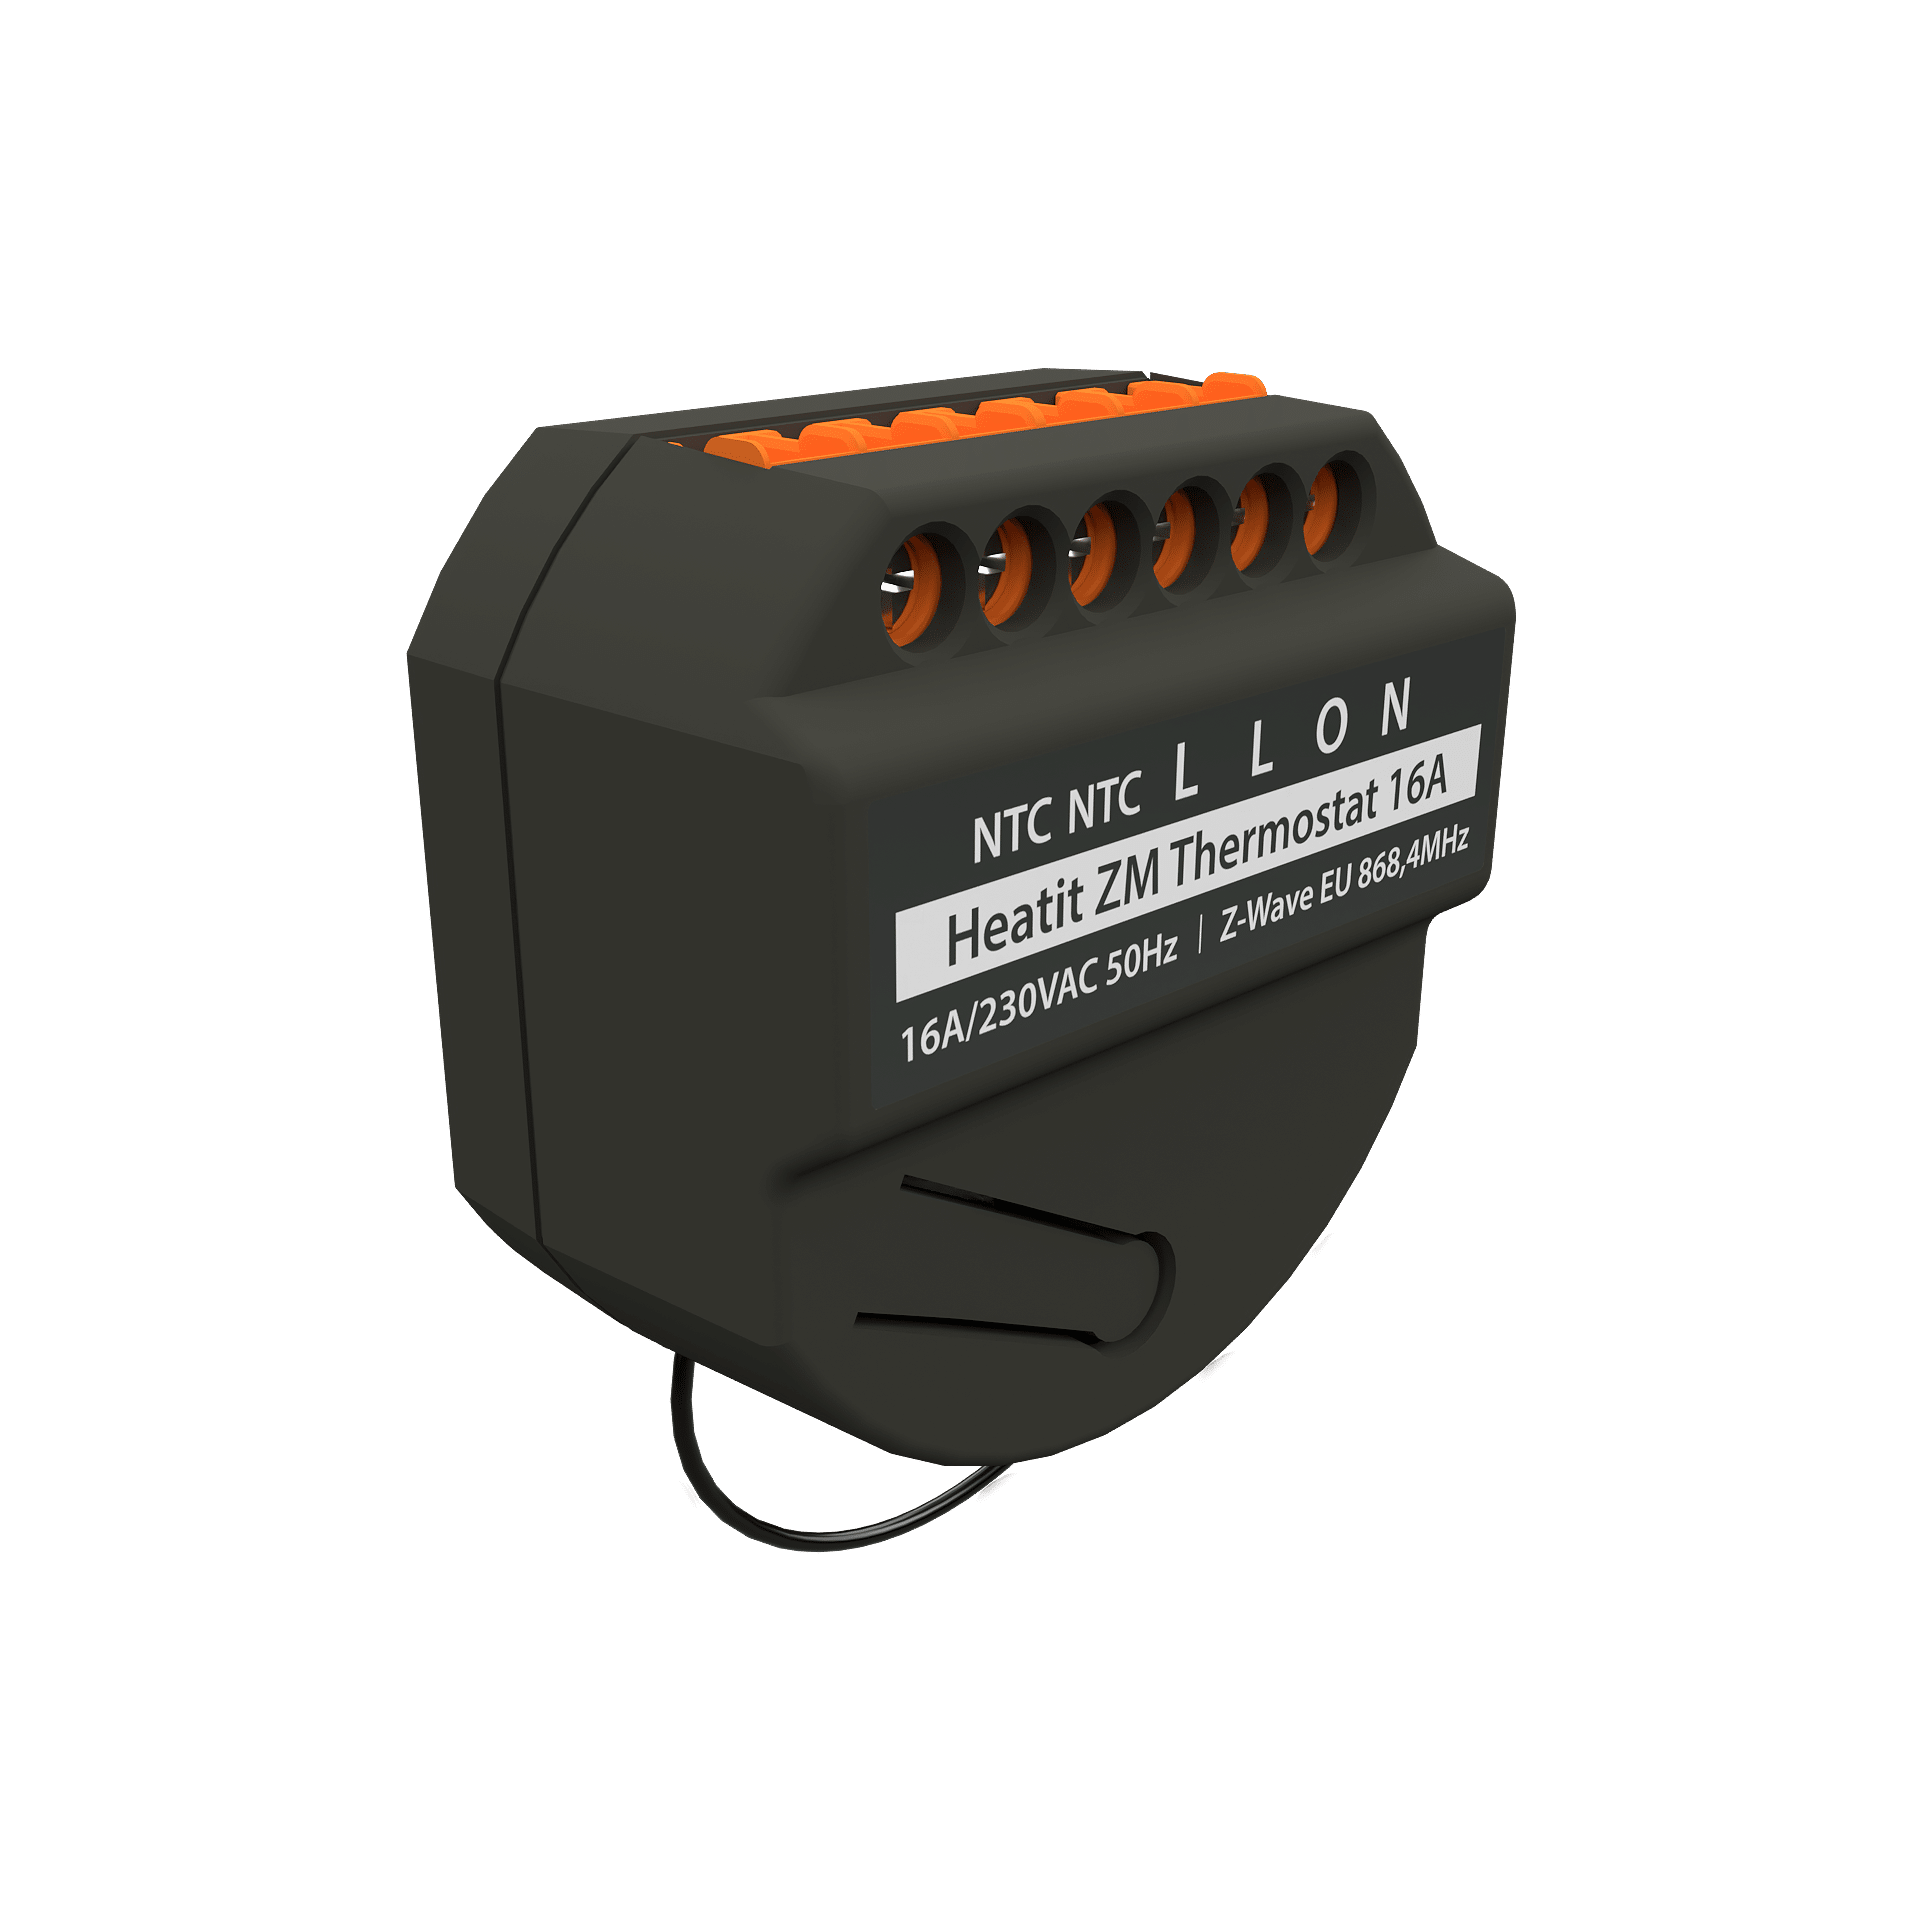 Heatit ZM Thermostat 16A